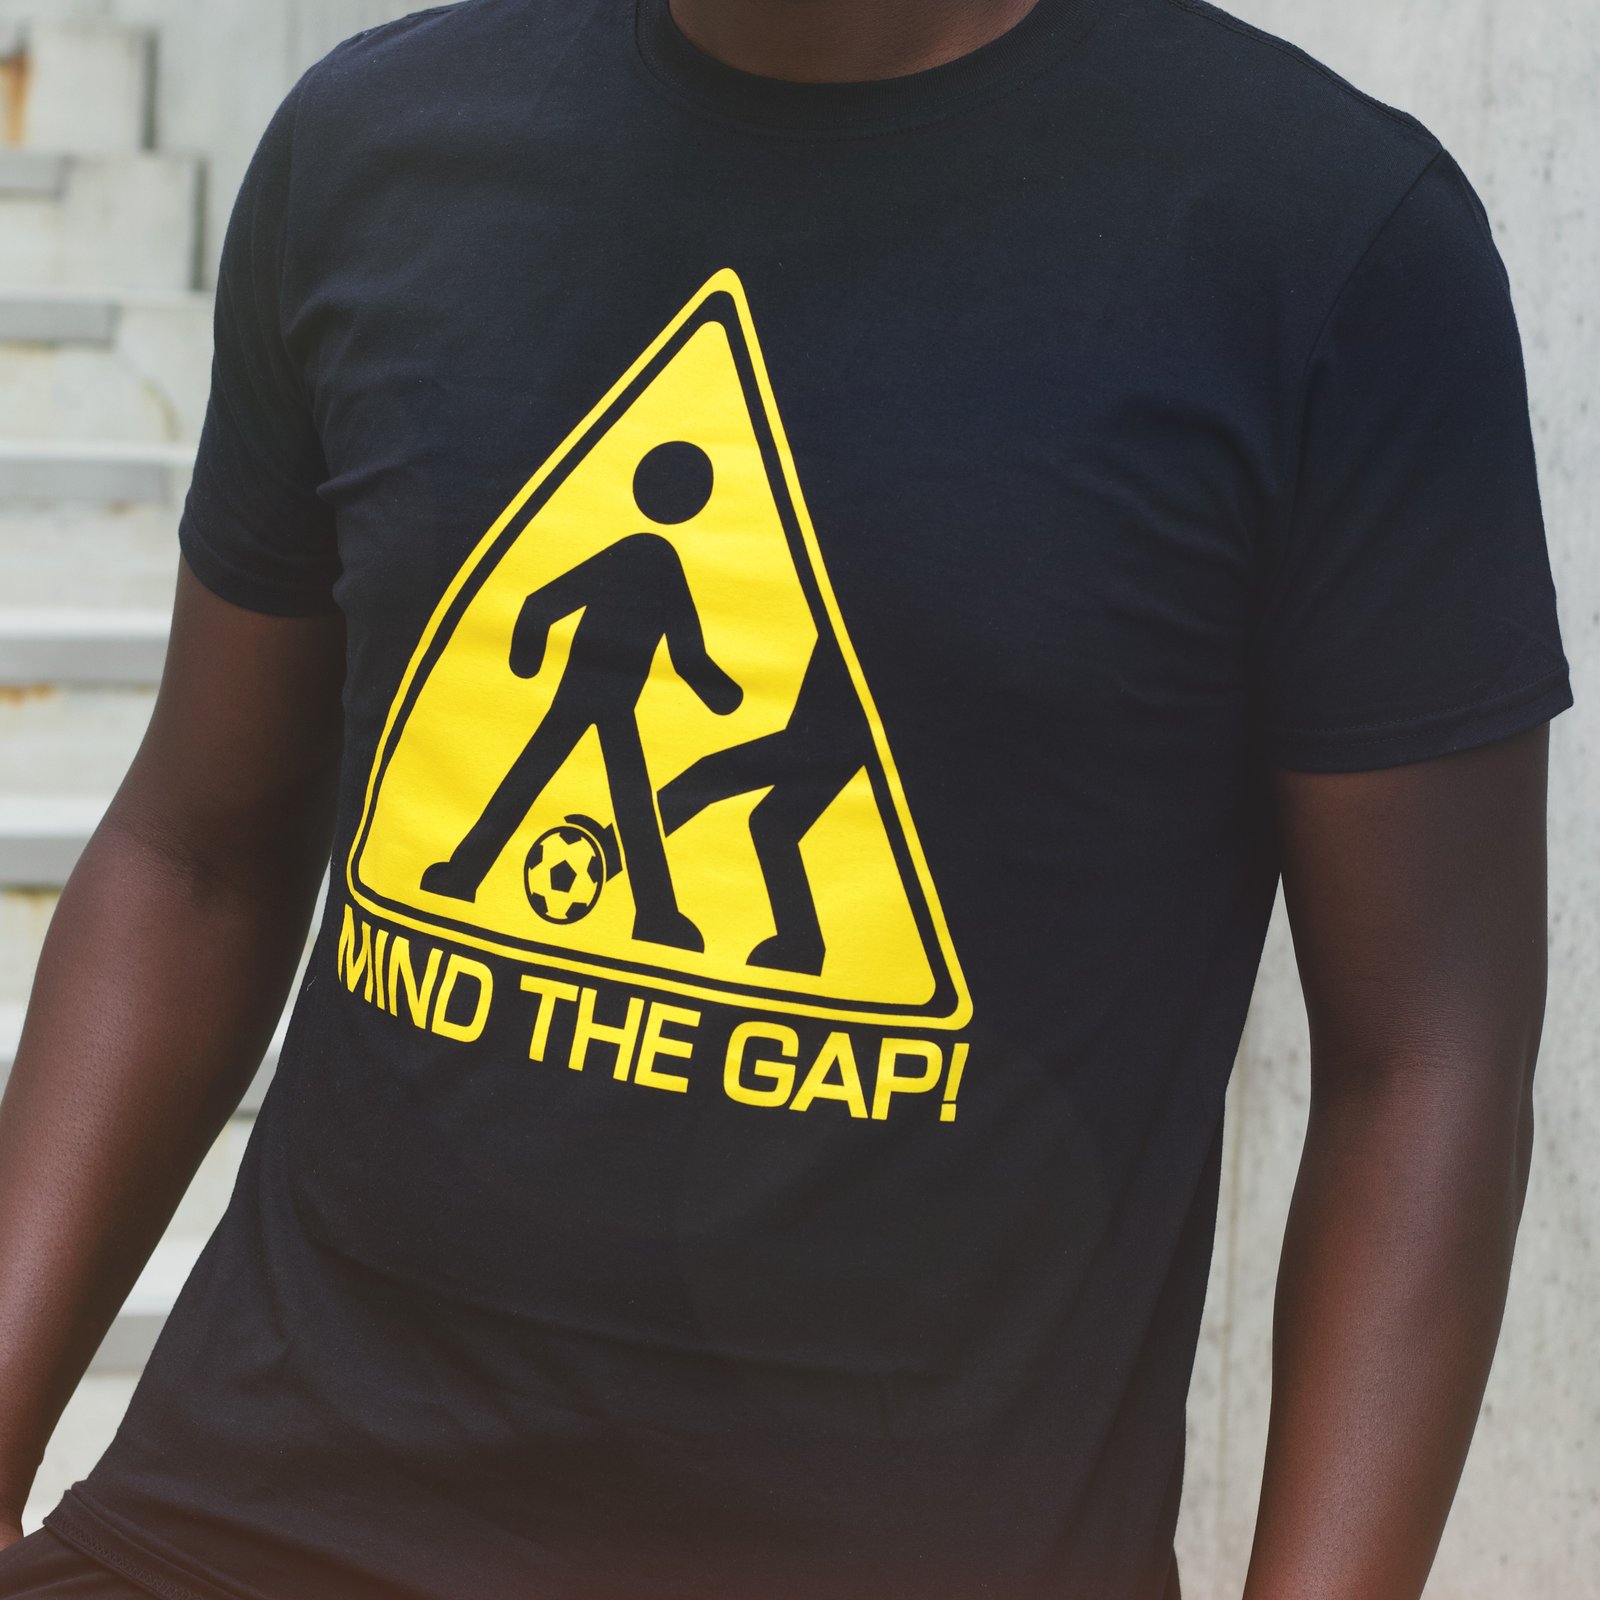 gap t shirt sale